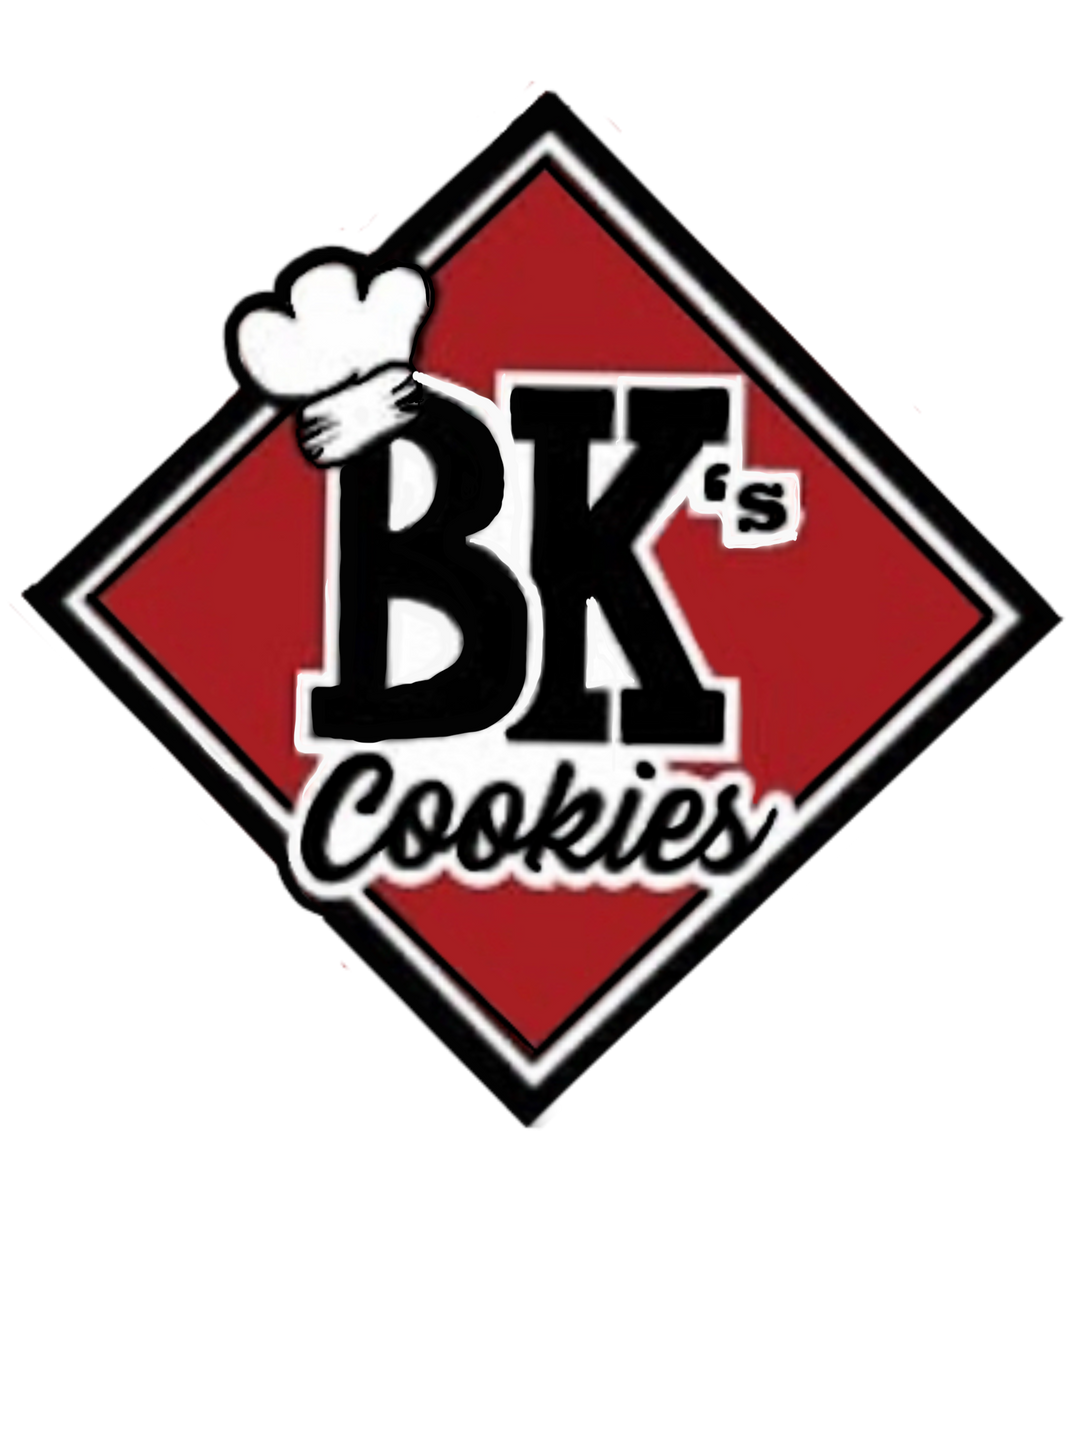 BK’s Original Cookies